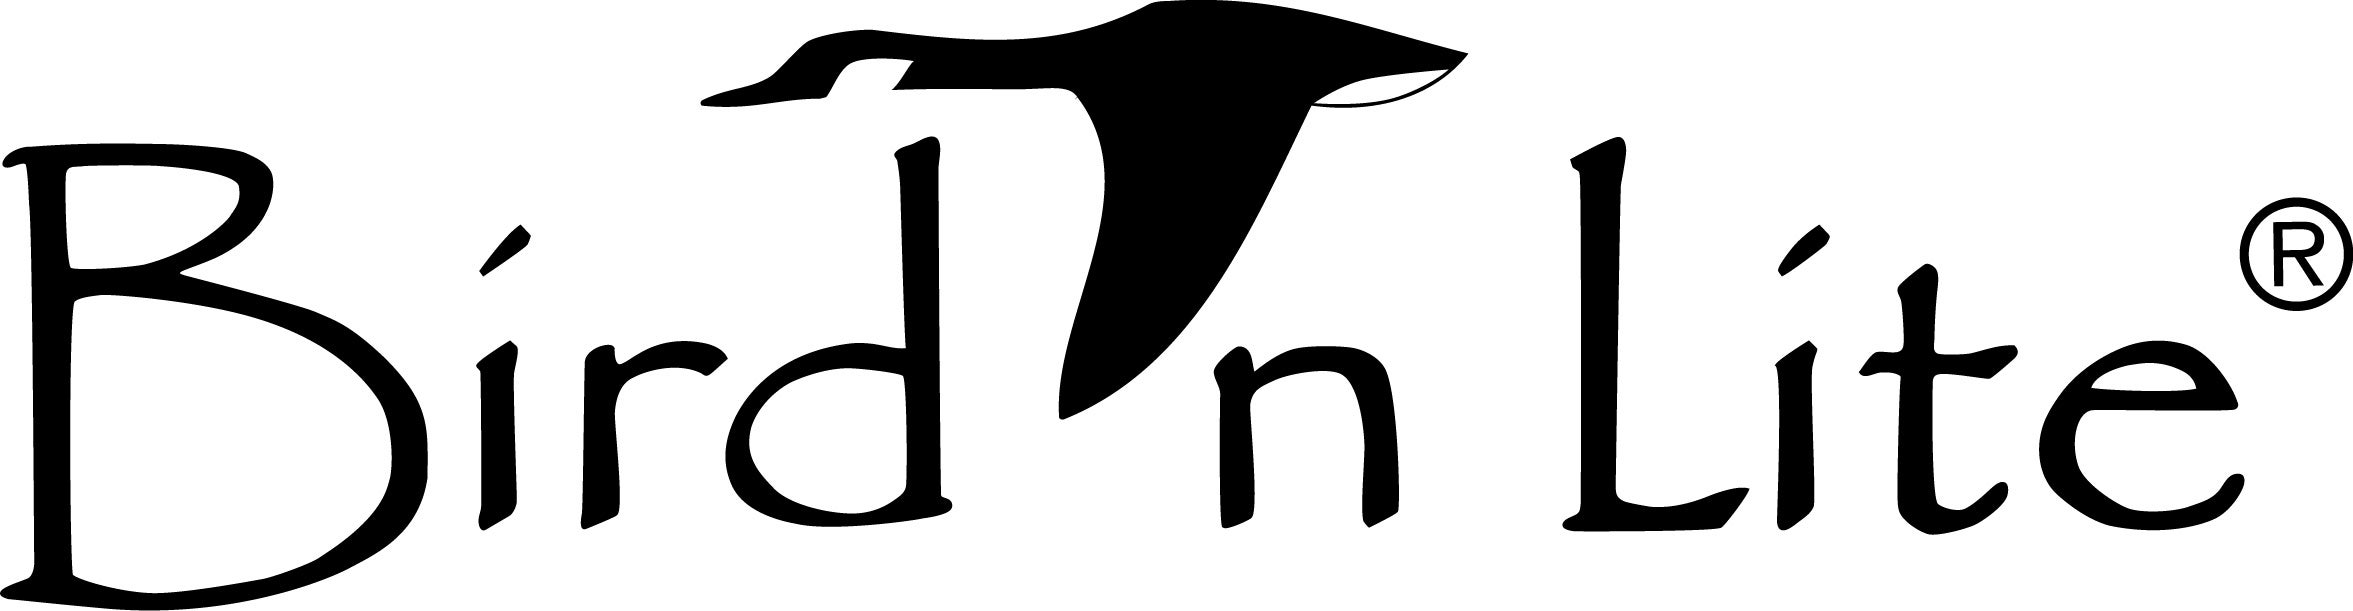 Bird n Lite Logo